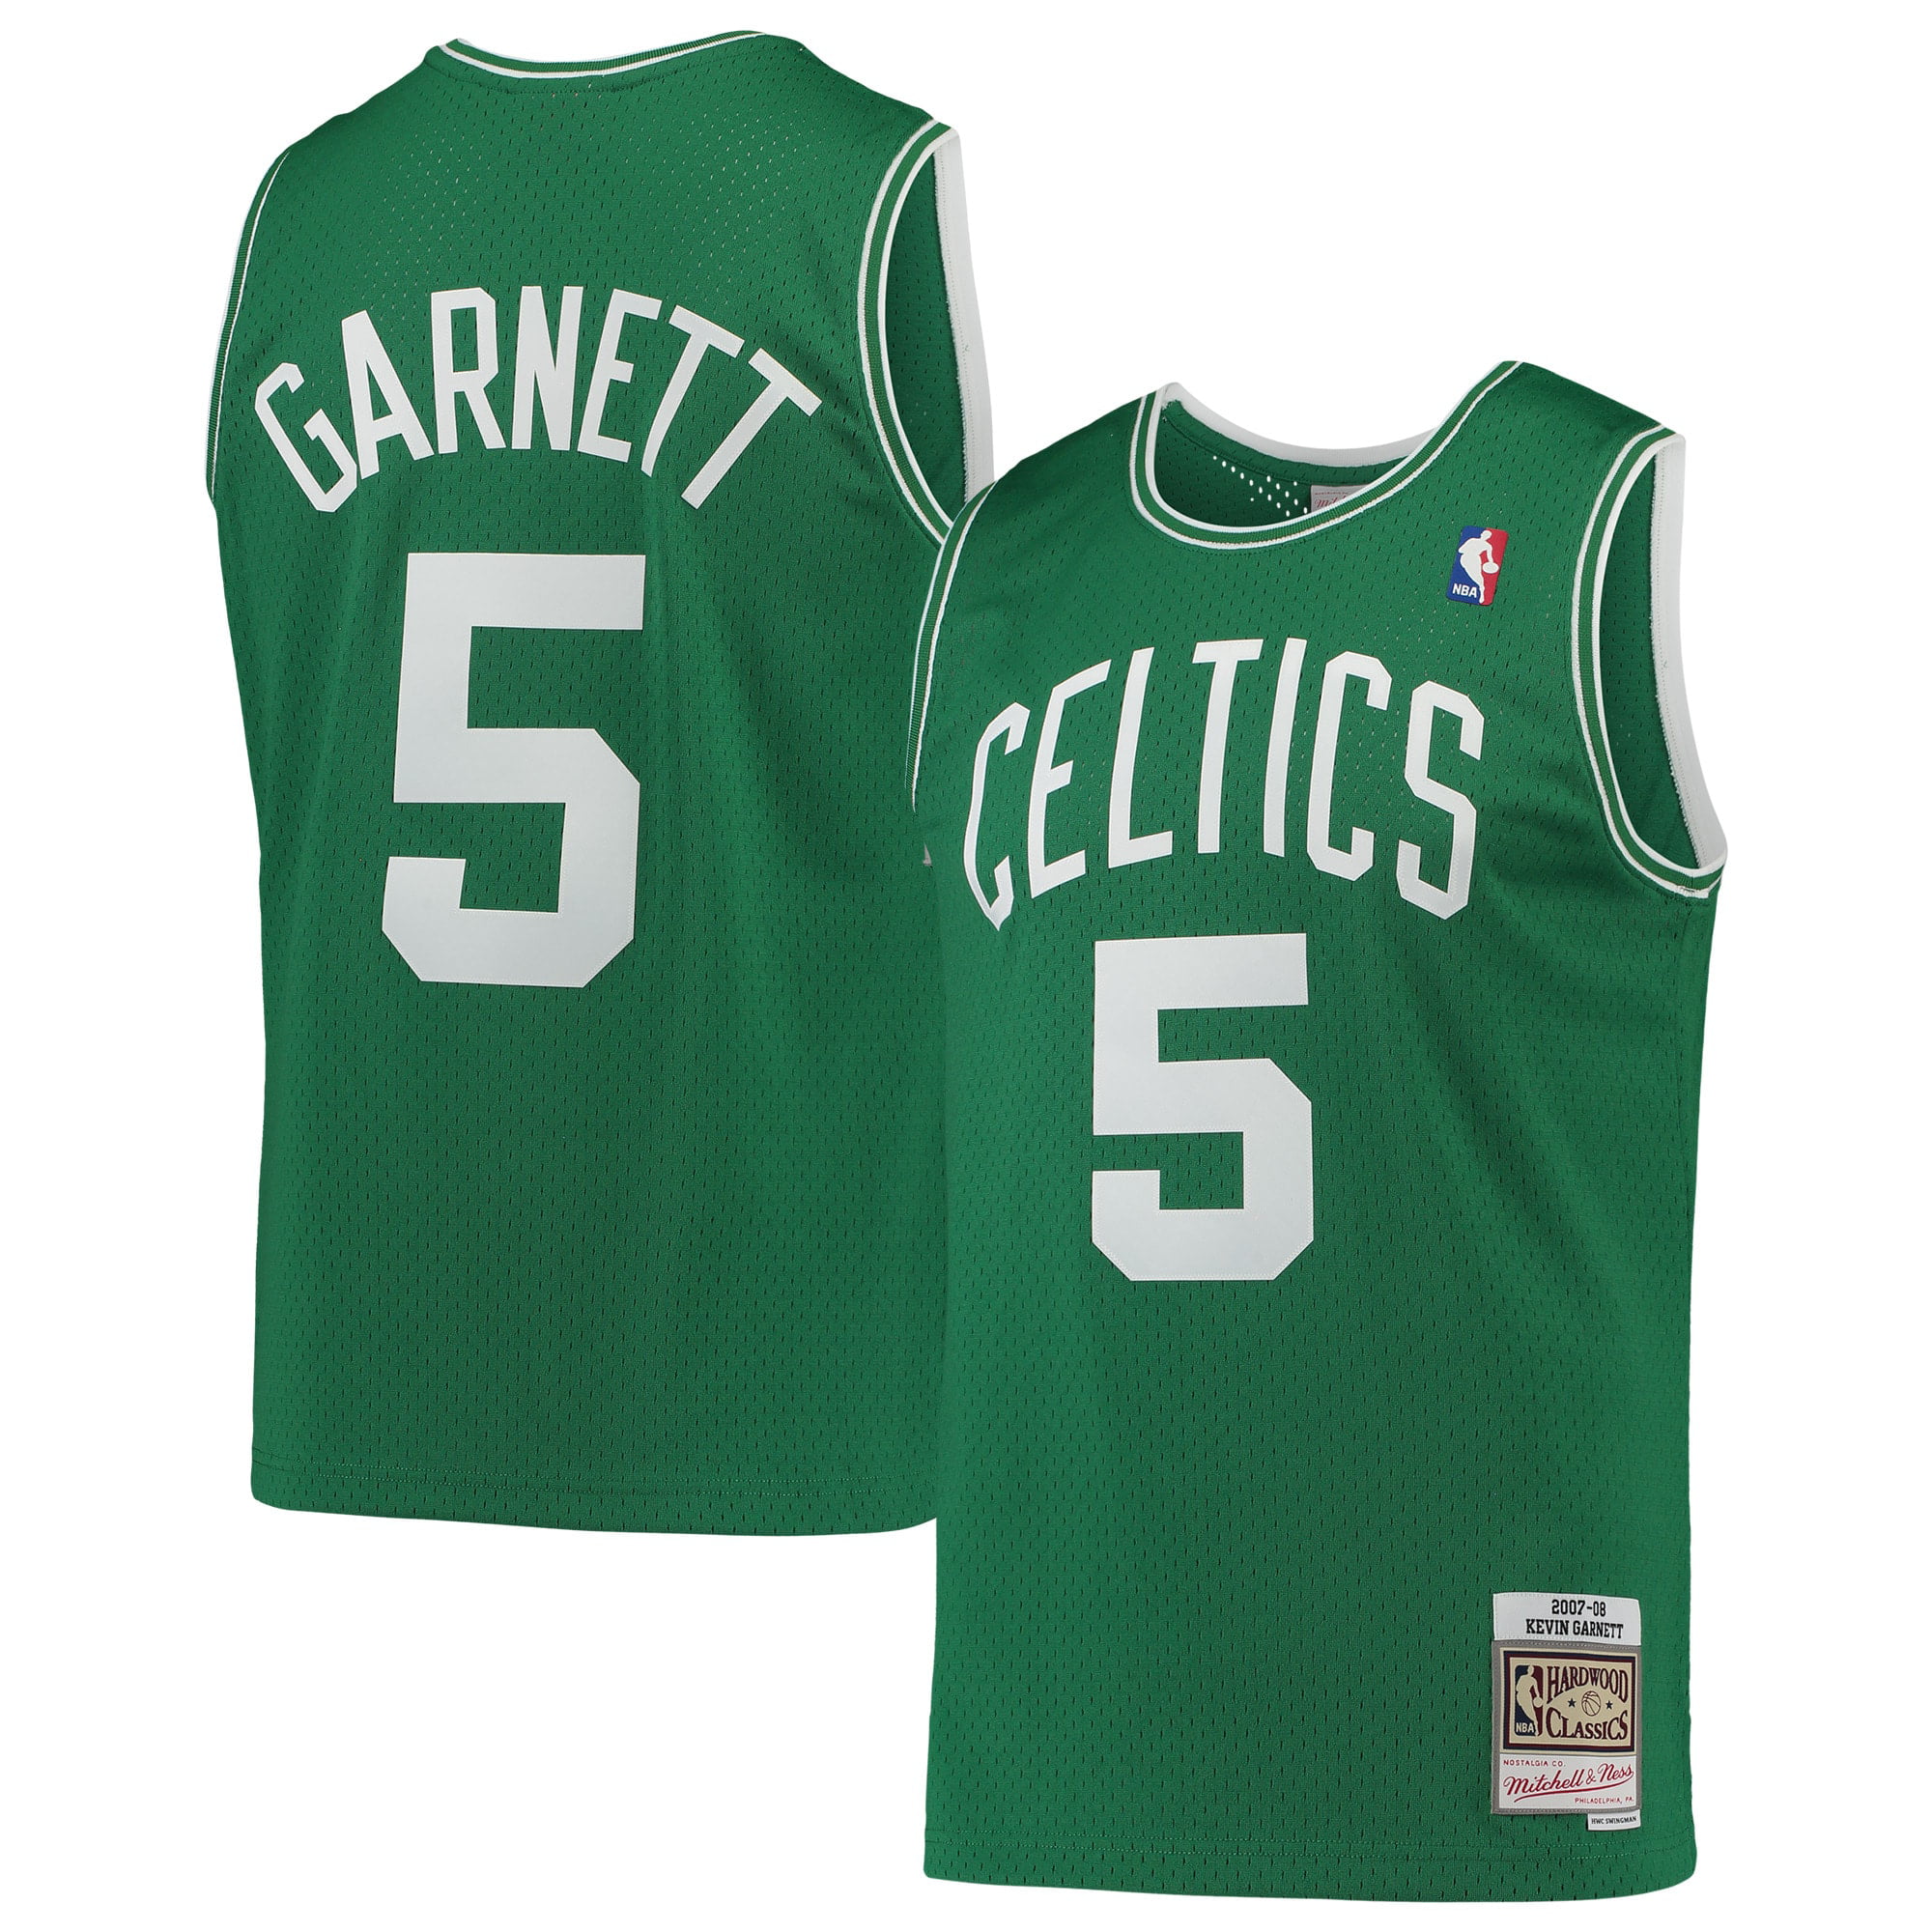 ~Men's Boston Celtics Larry Bird Retro Basketball jersey Green  STOCK~ 